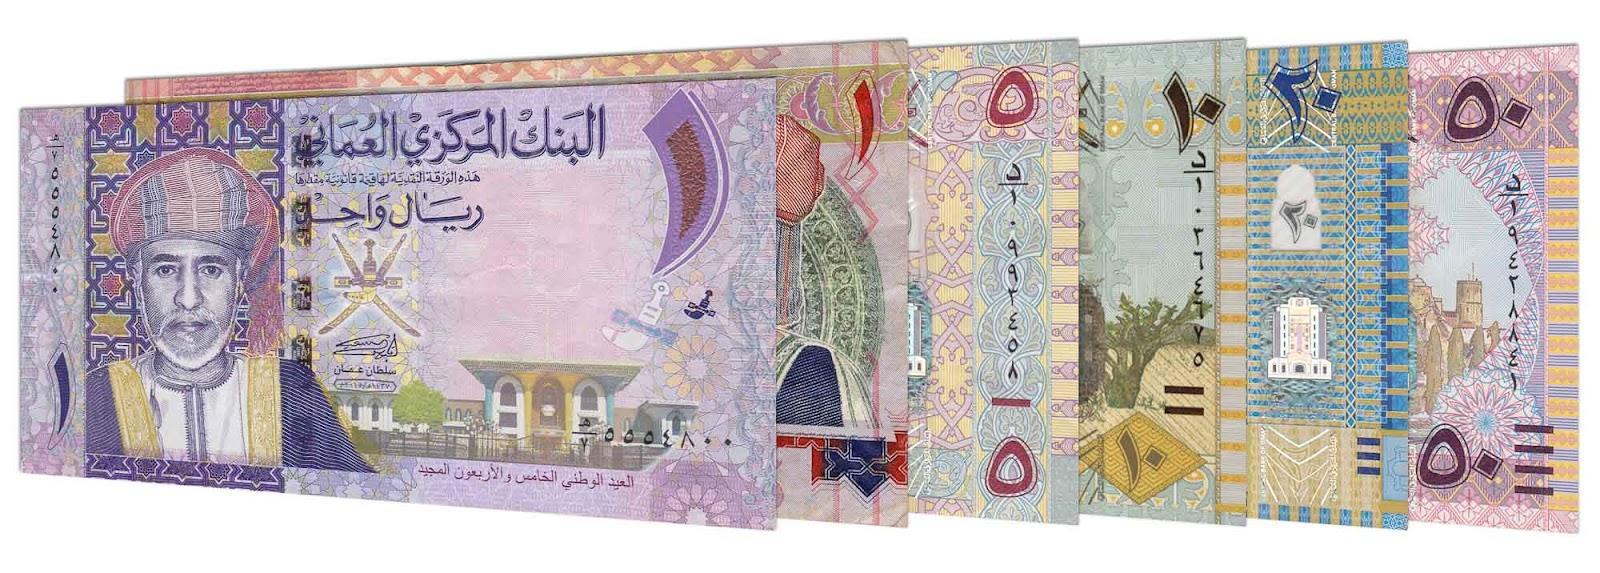 Omani Rial banknote series